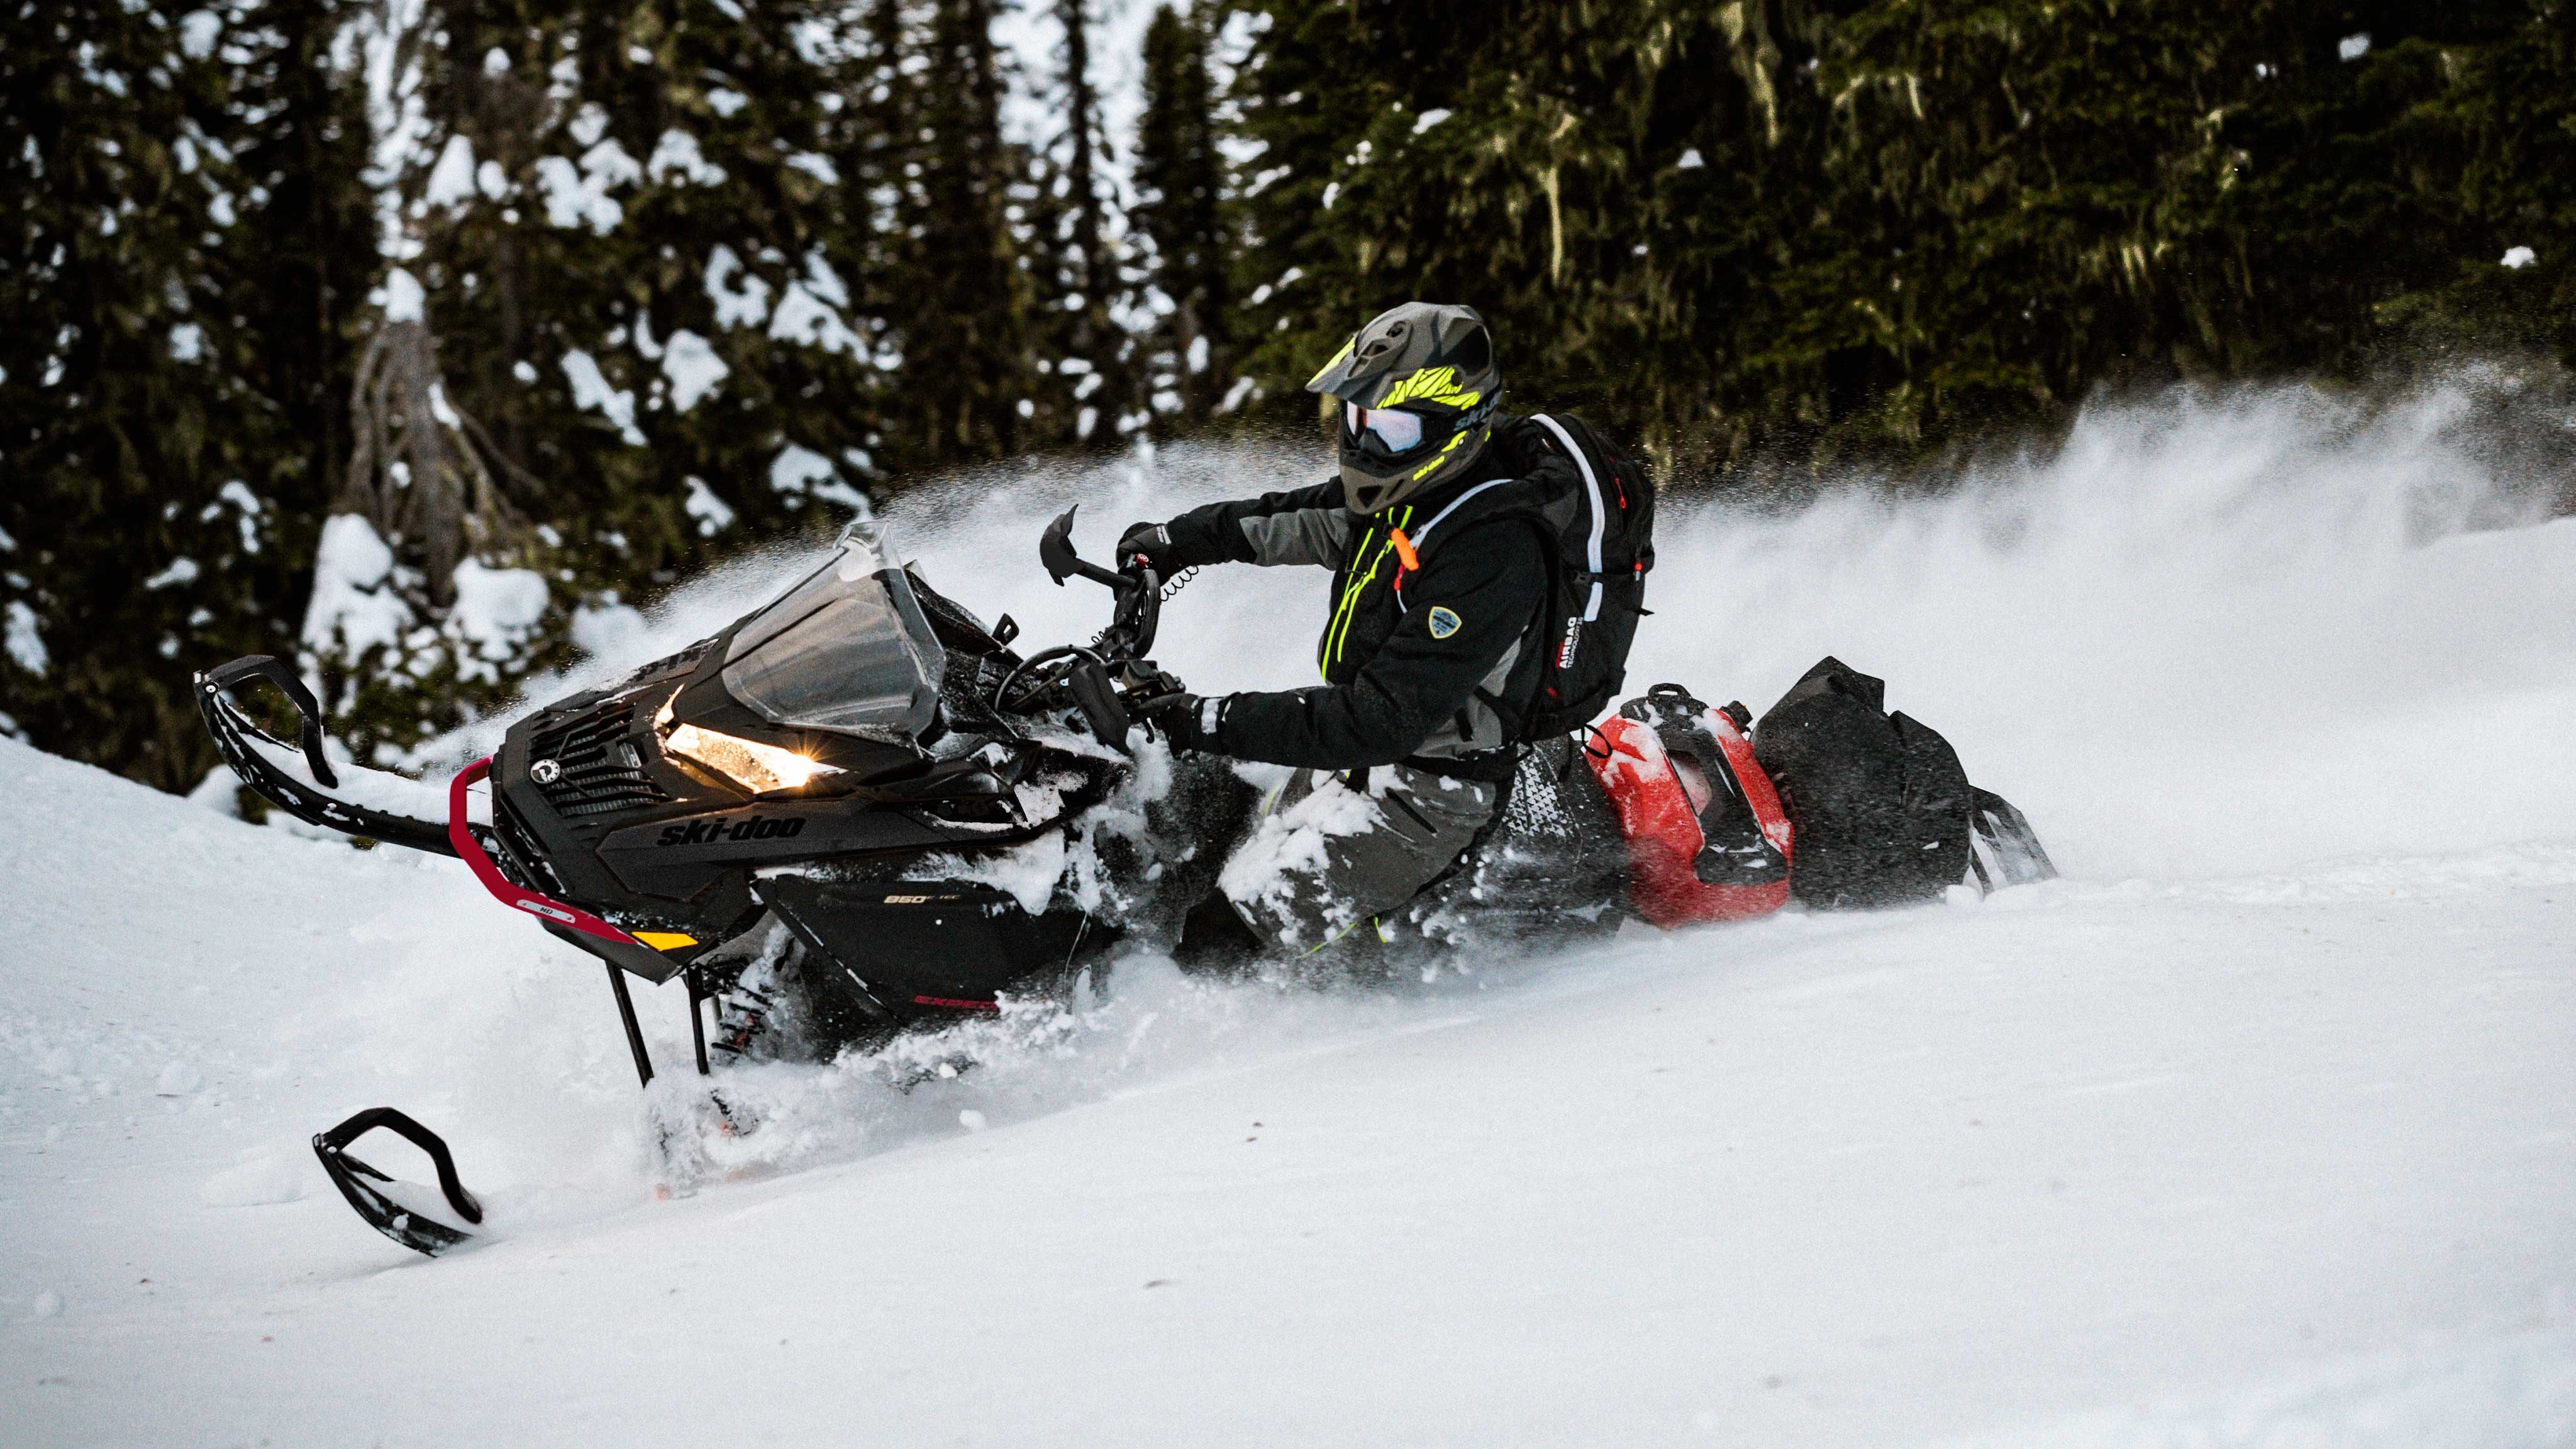 2023 Ski-Doo Motorne Sanjke Snowmobile Snow Sled BRP Ski&Sea Expedition